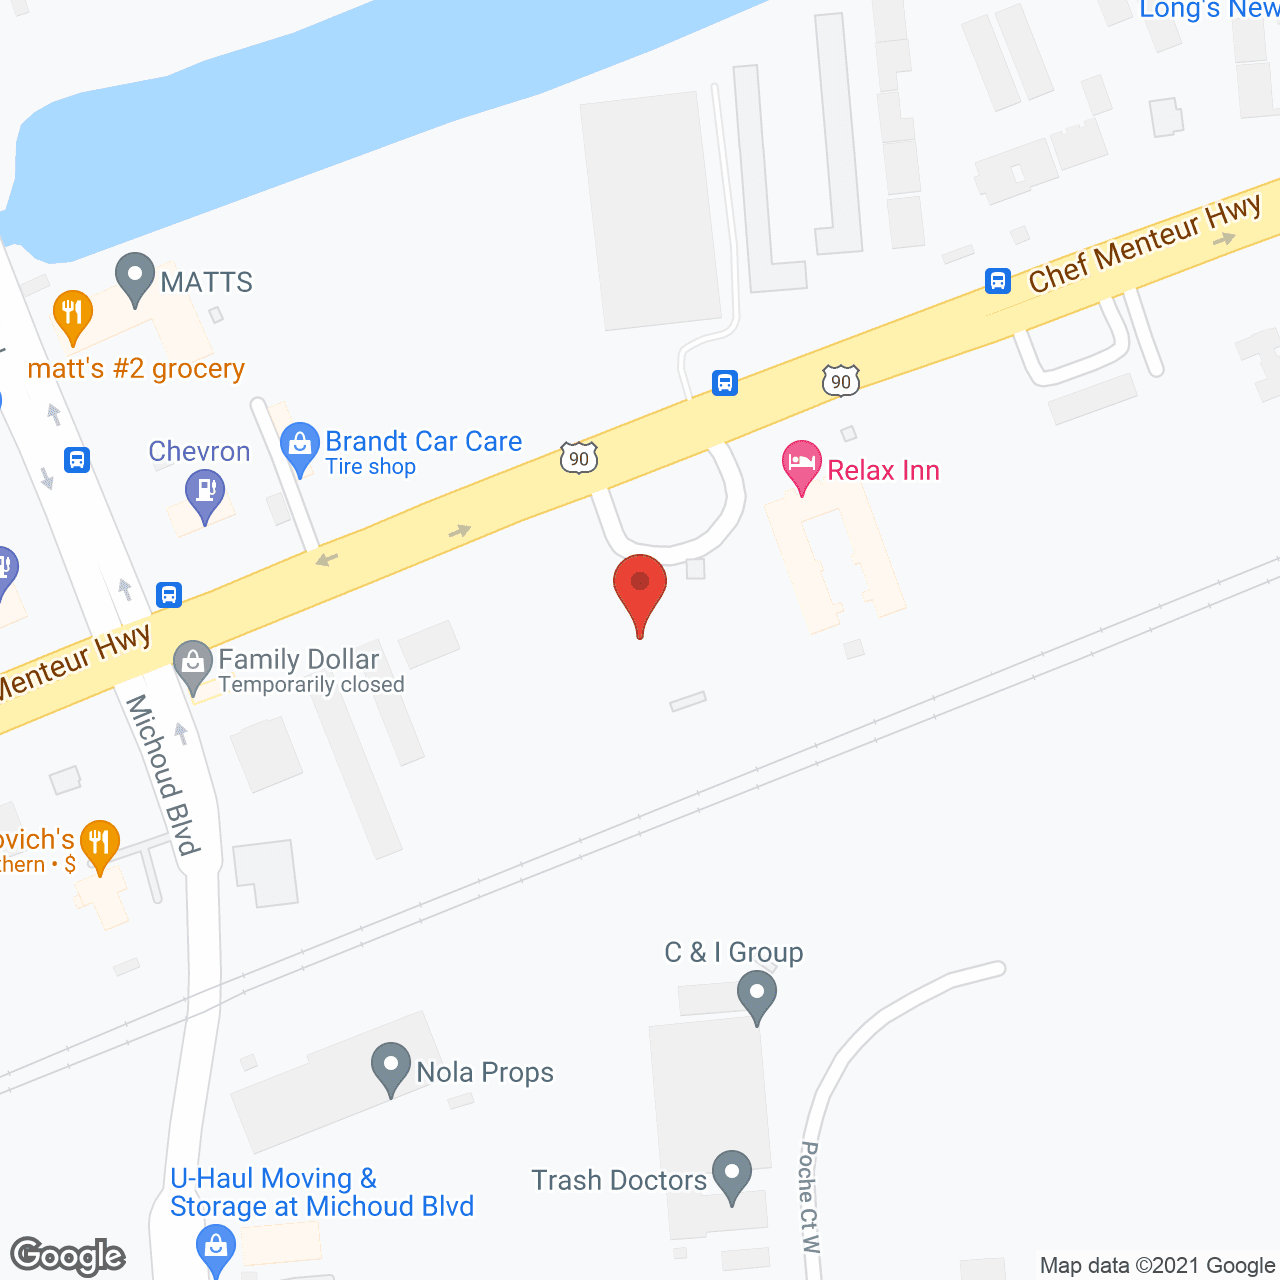 Maison Orleans Nursing Home in google map